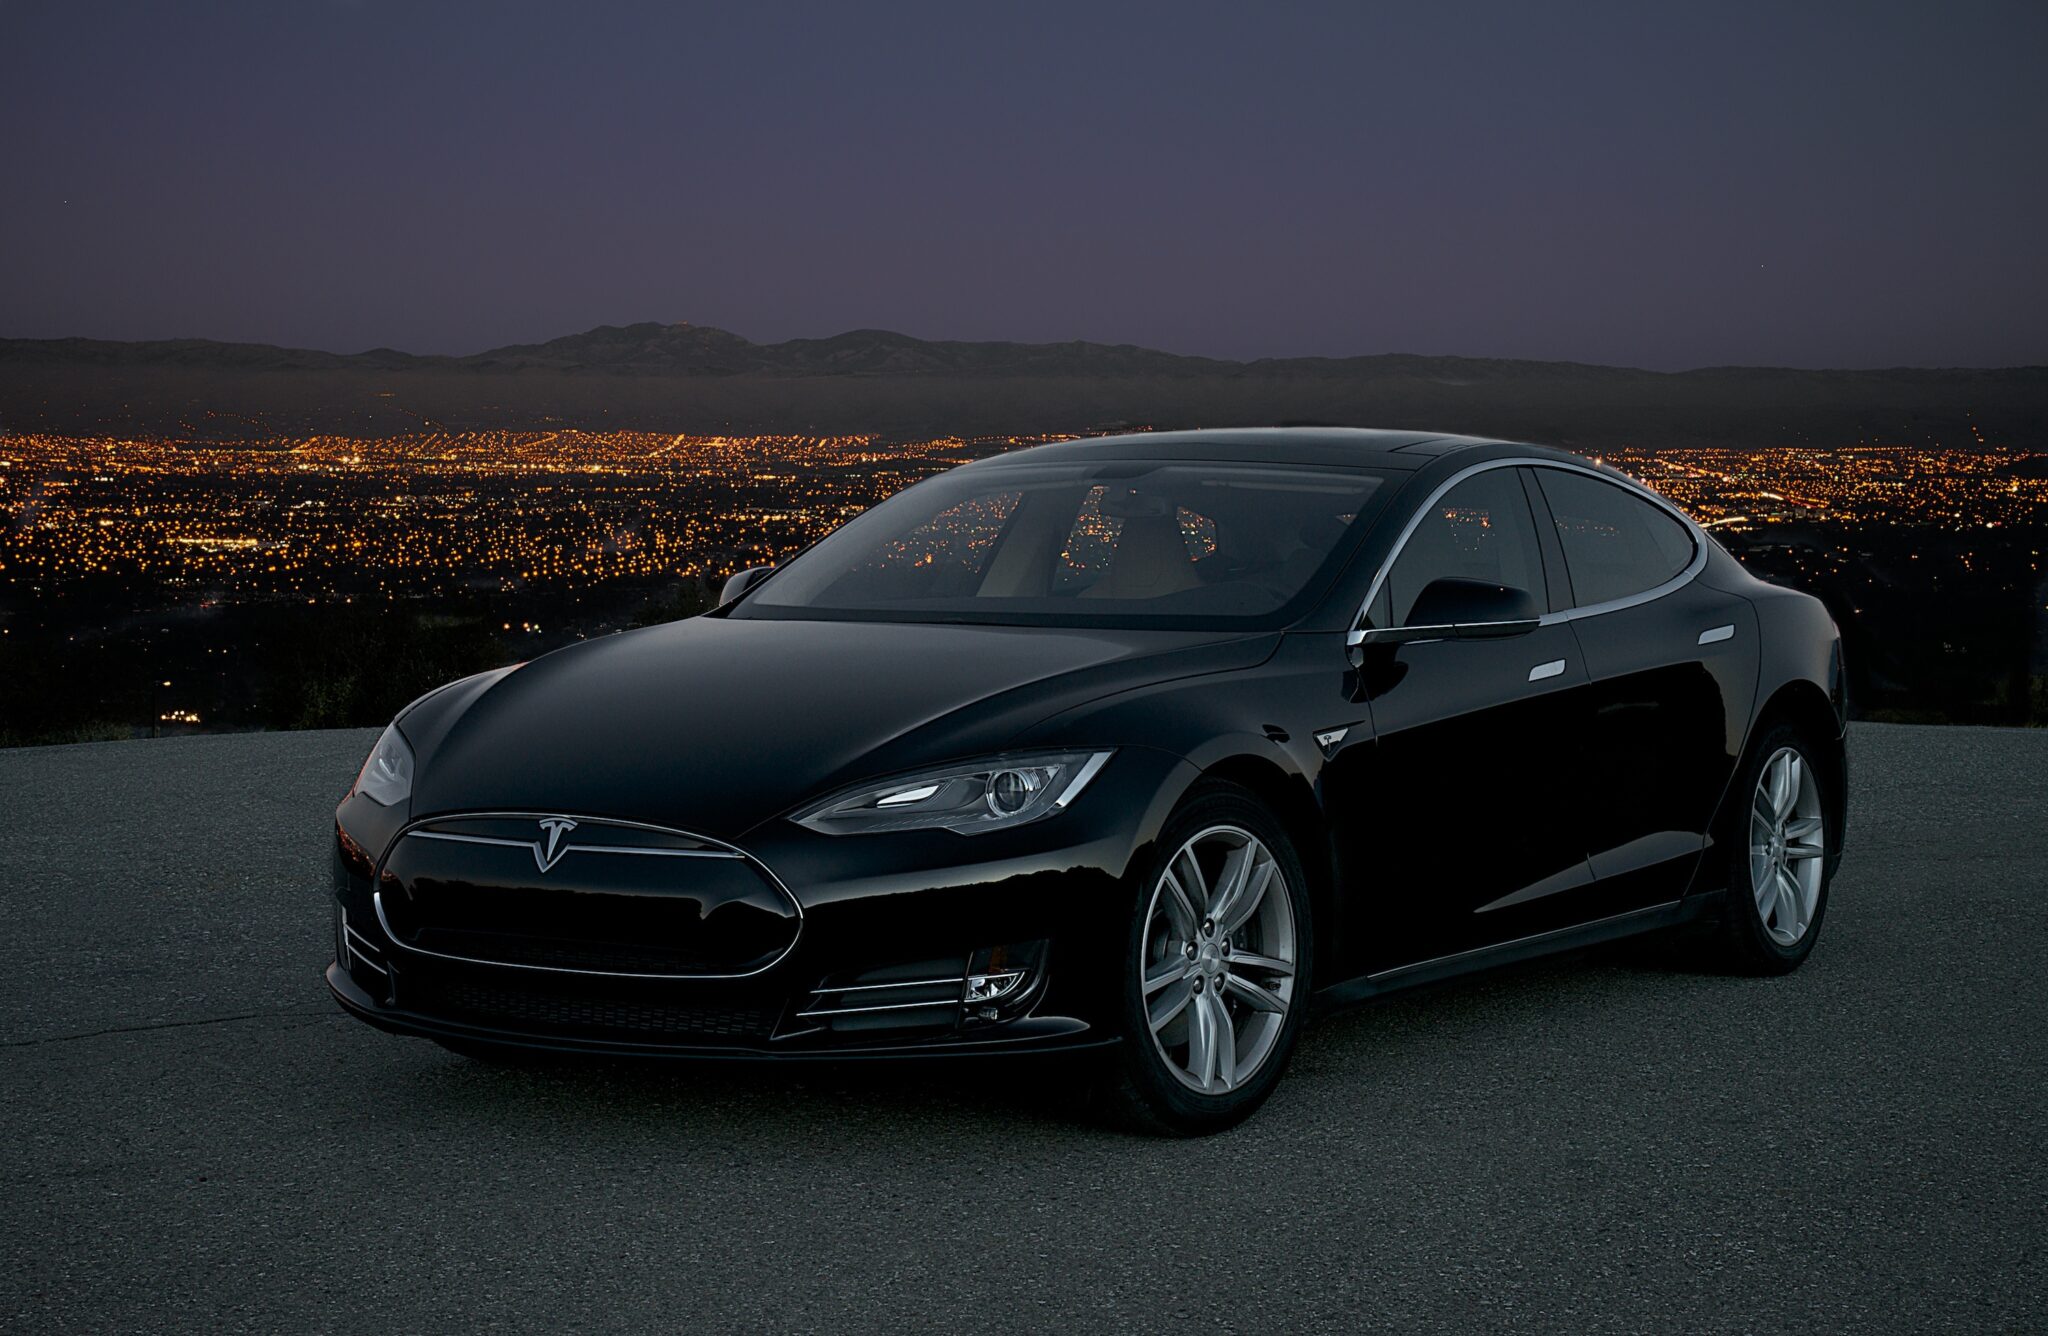 Buying a Tesla car in Israel